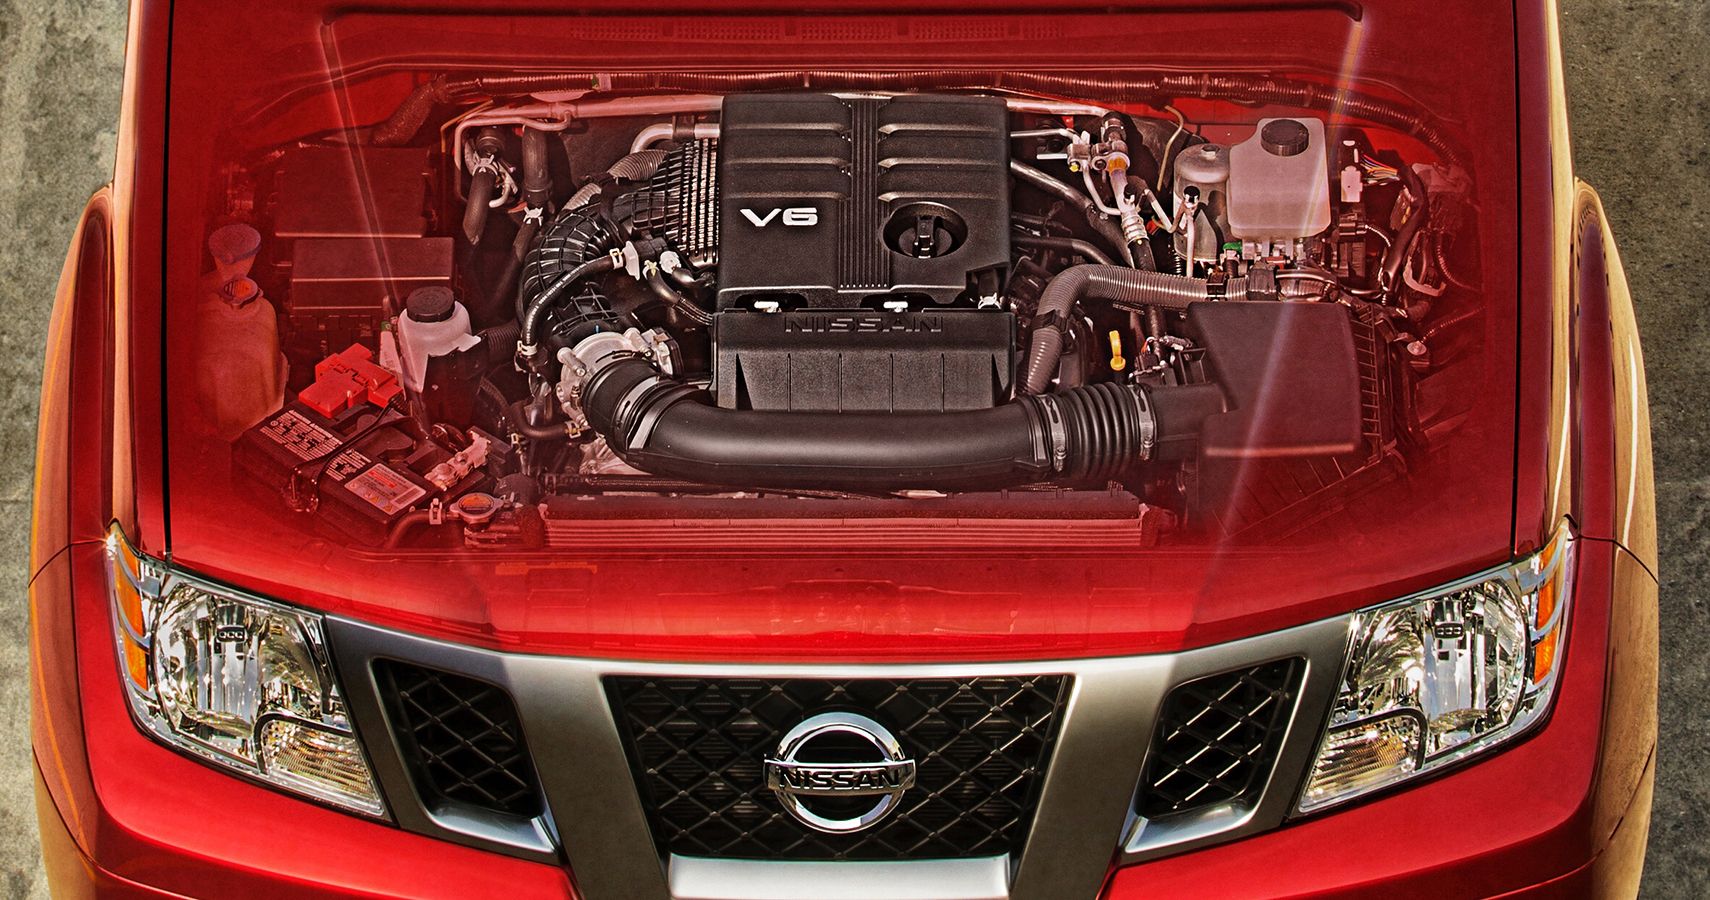 2020 Nissan Frontier V6 engine front